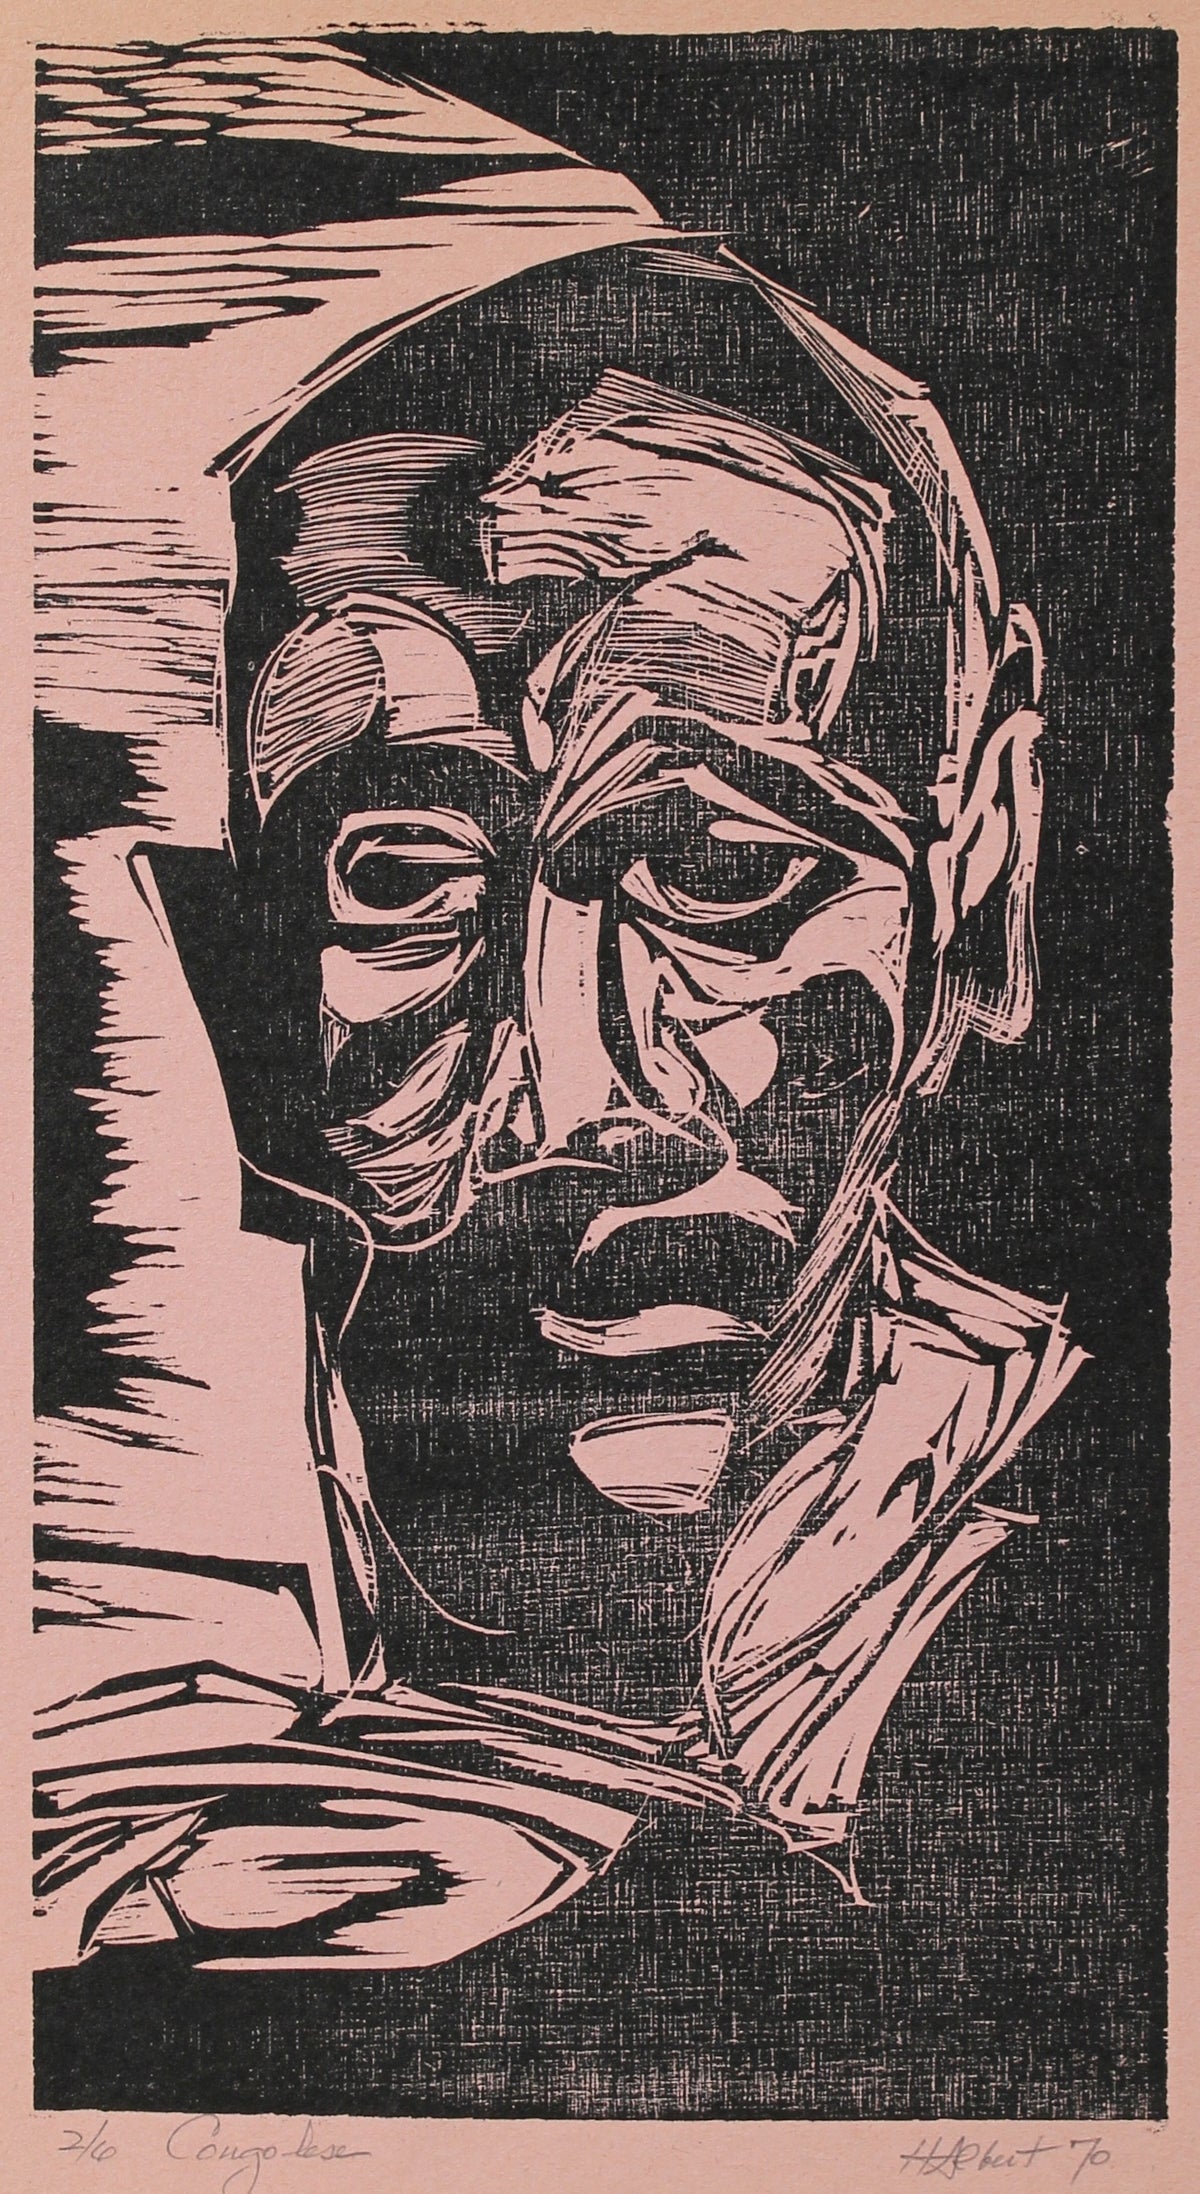 &lt;i&gt;Congolese&lt;/i&gt;&lt;br&gt;1970 Woodcut on Paper&lt;br&gt;&lt;br&gt;#A0431